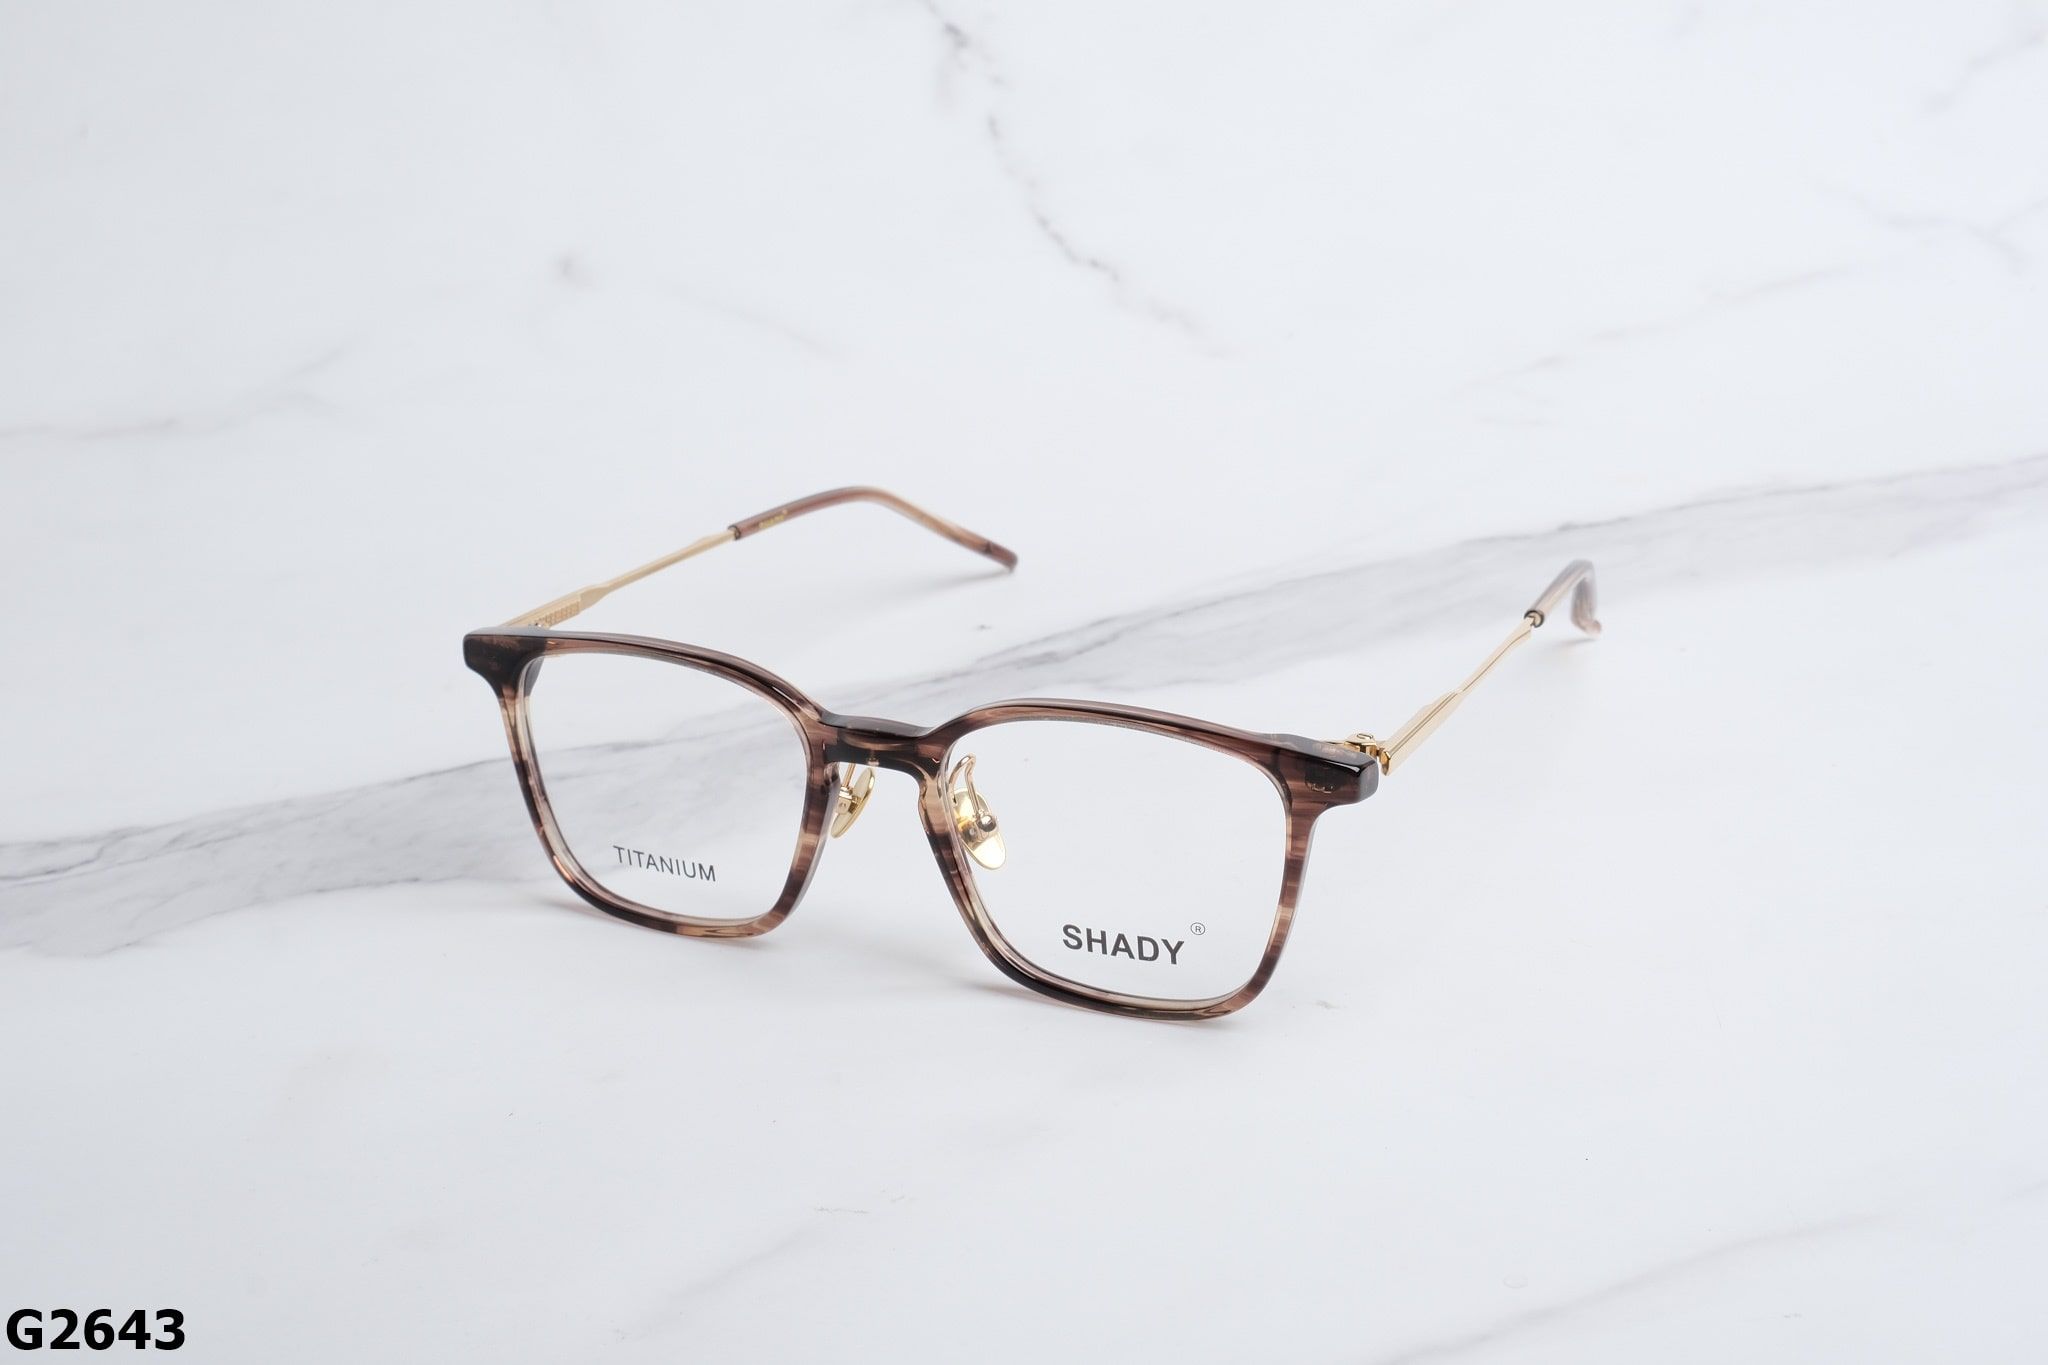  SHADY Eyewear - Glasses - G2643 